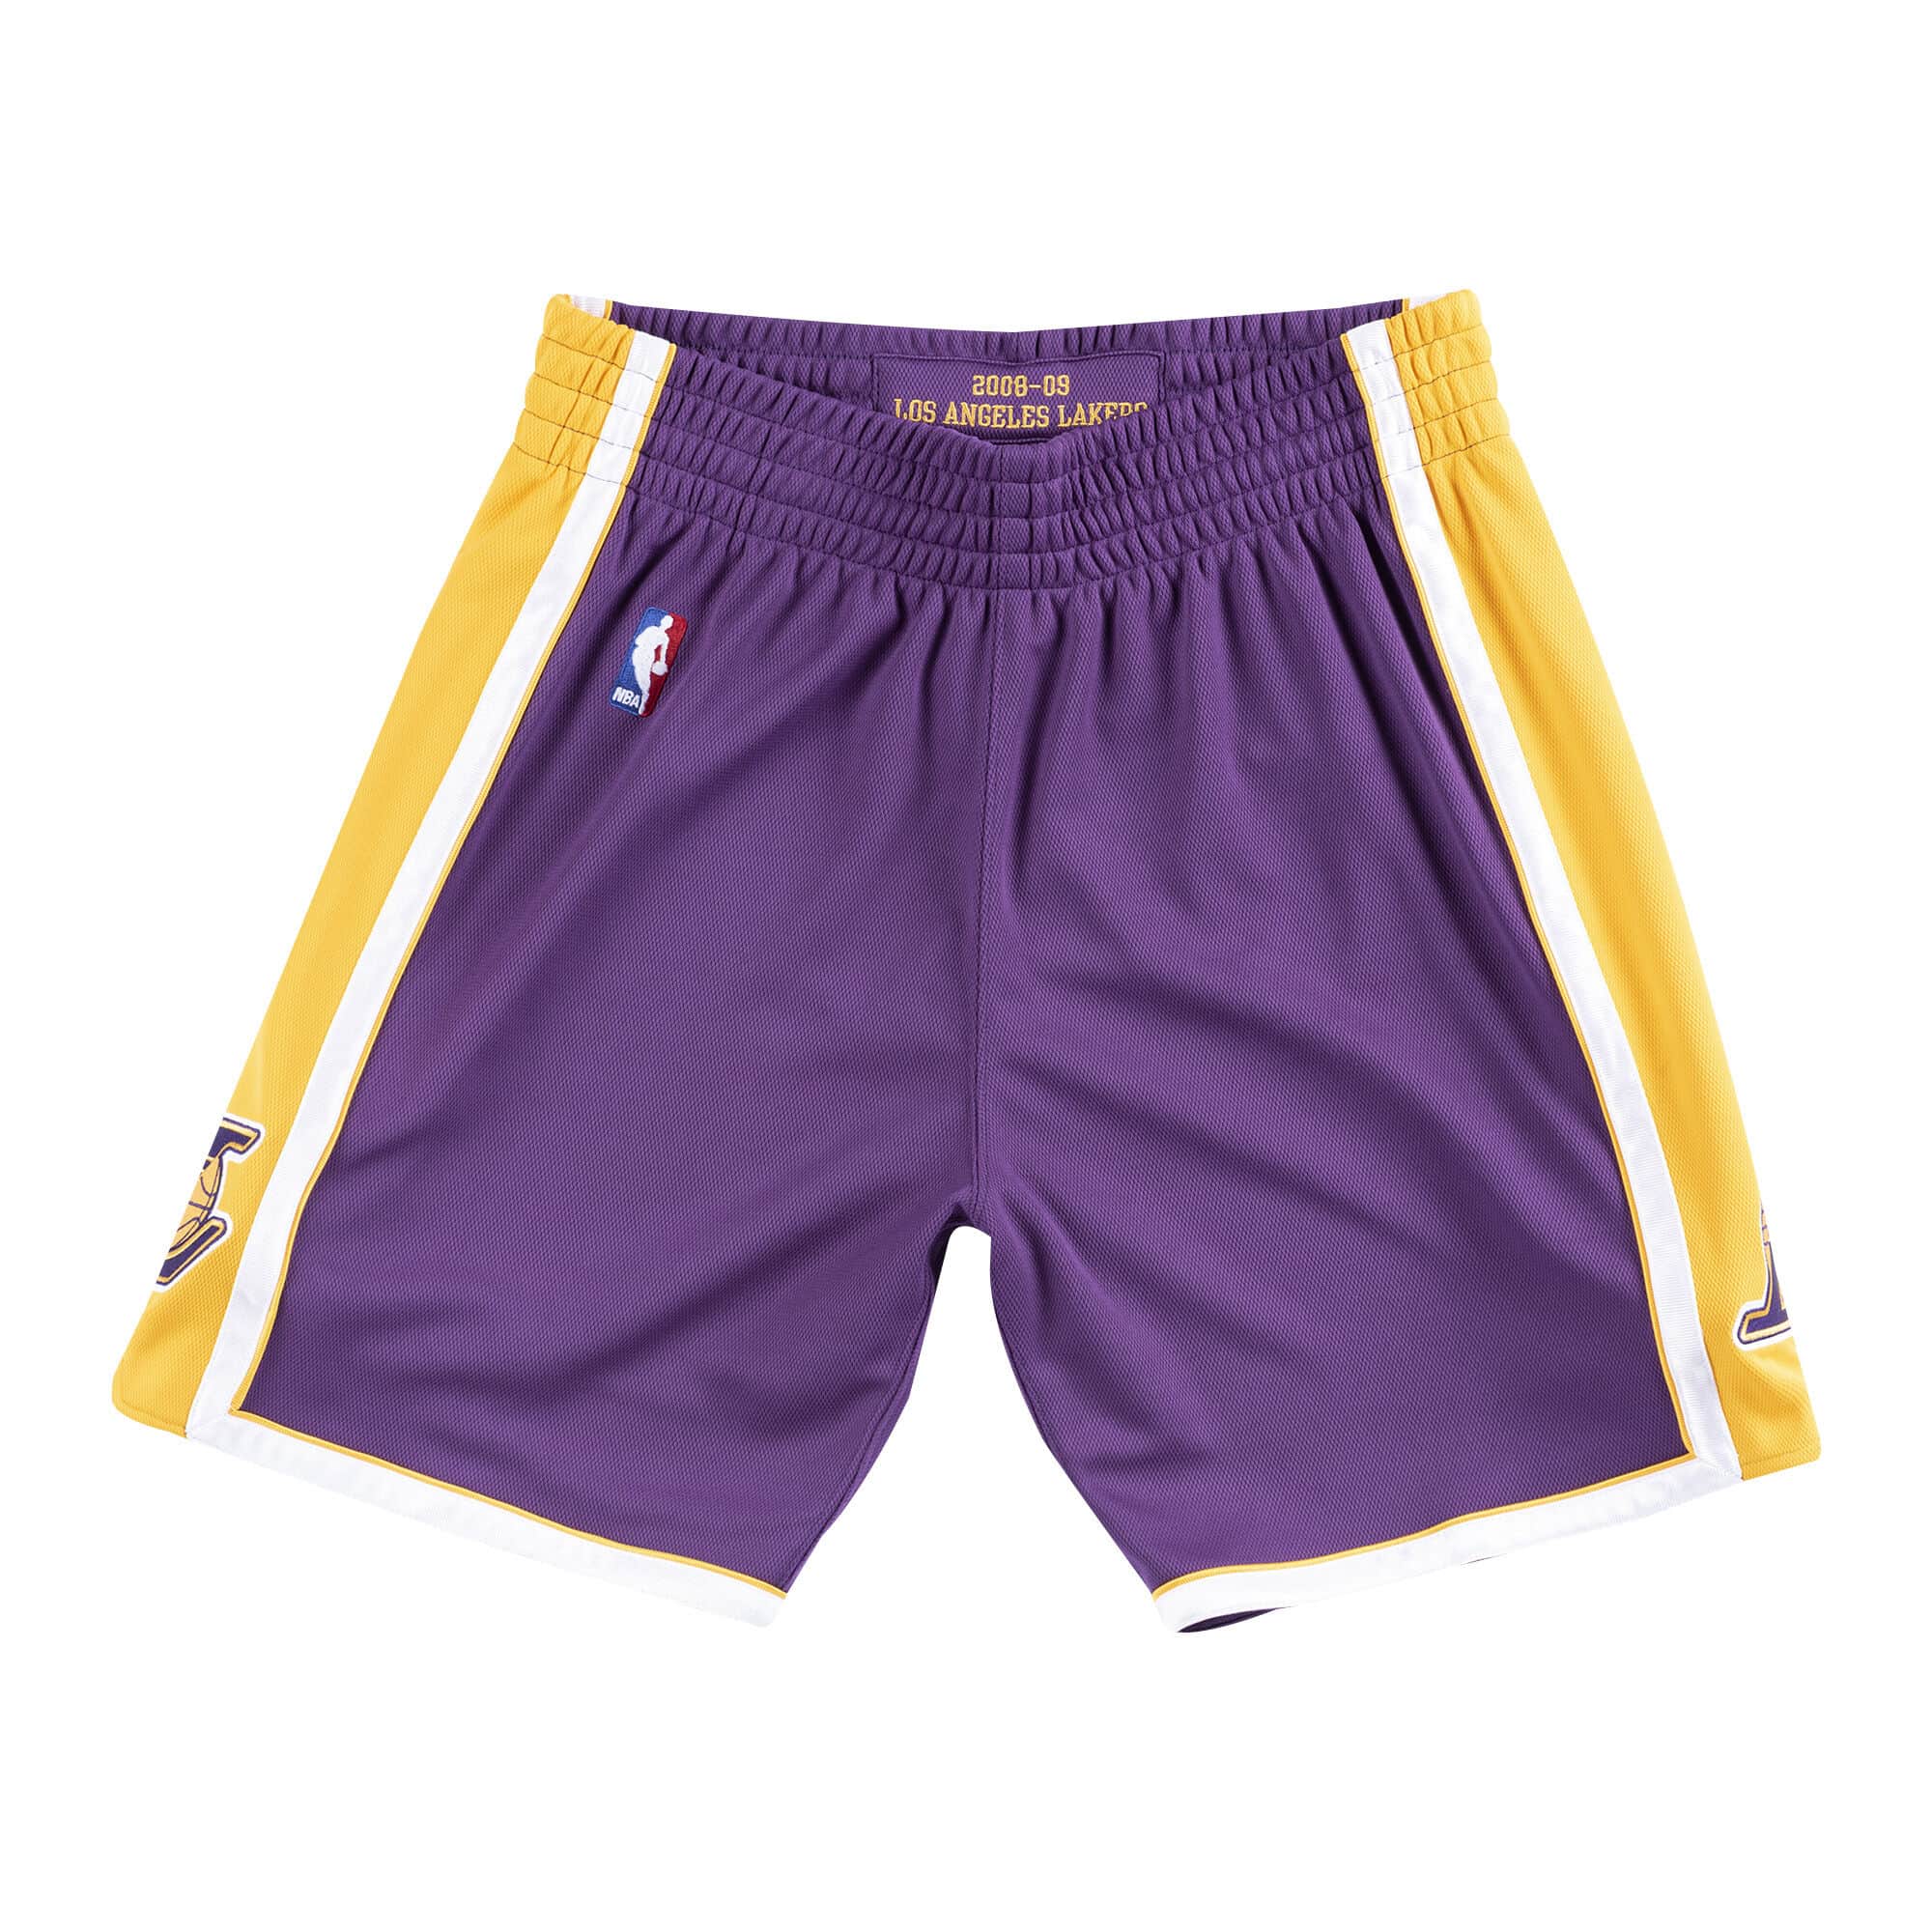 Utah Jazz Mitchell Ness 96-97 Authentic Shorts 100% Authentic Size